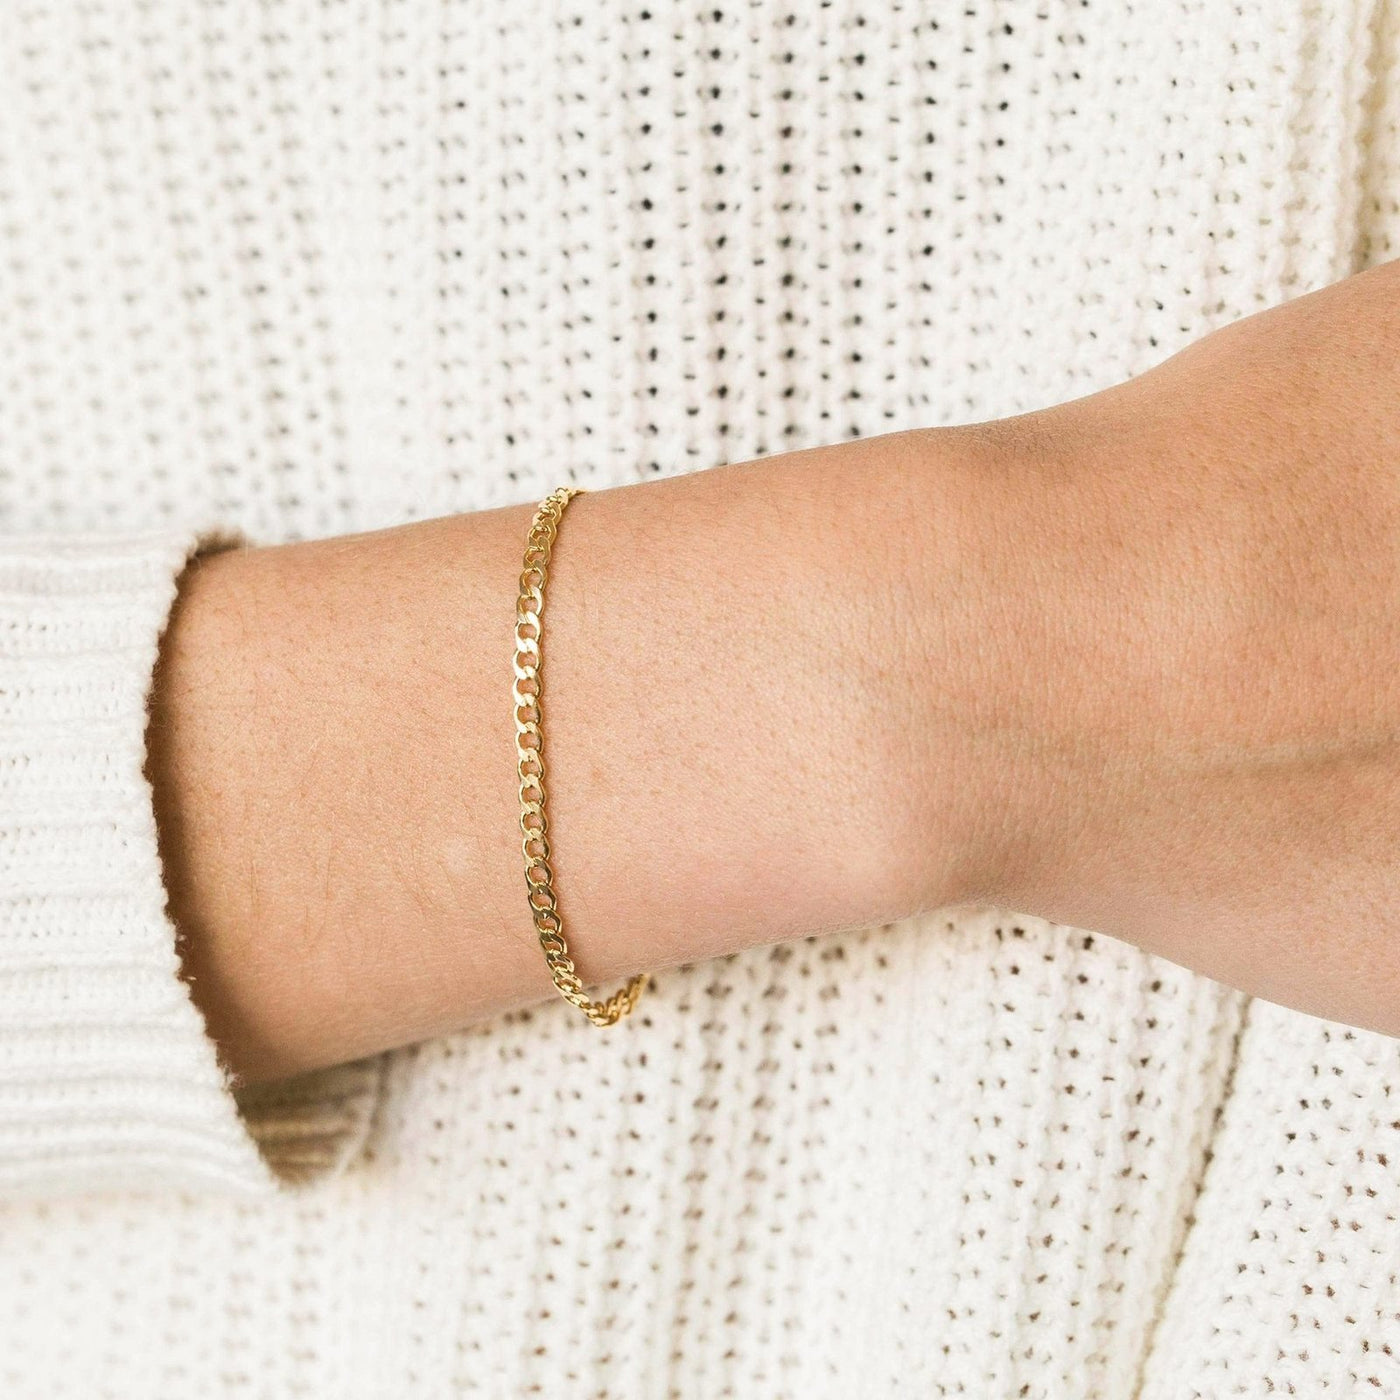 Curb Chain Bracelet by Simple & Dainty Jewelry